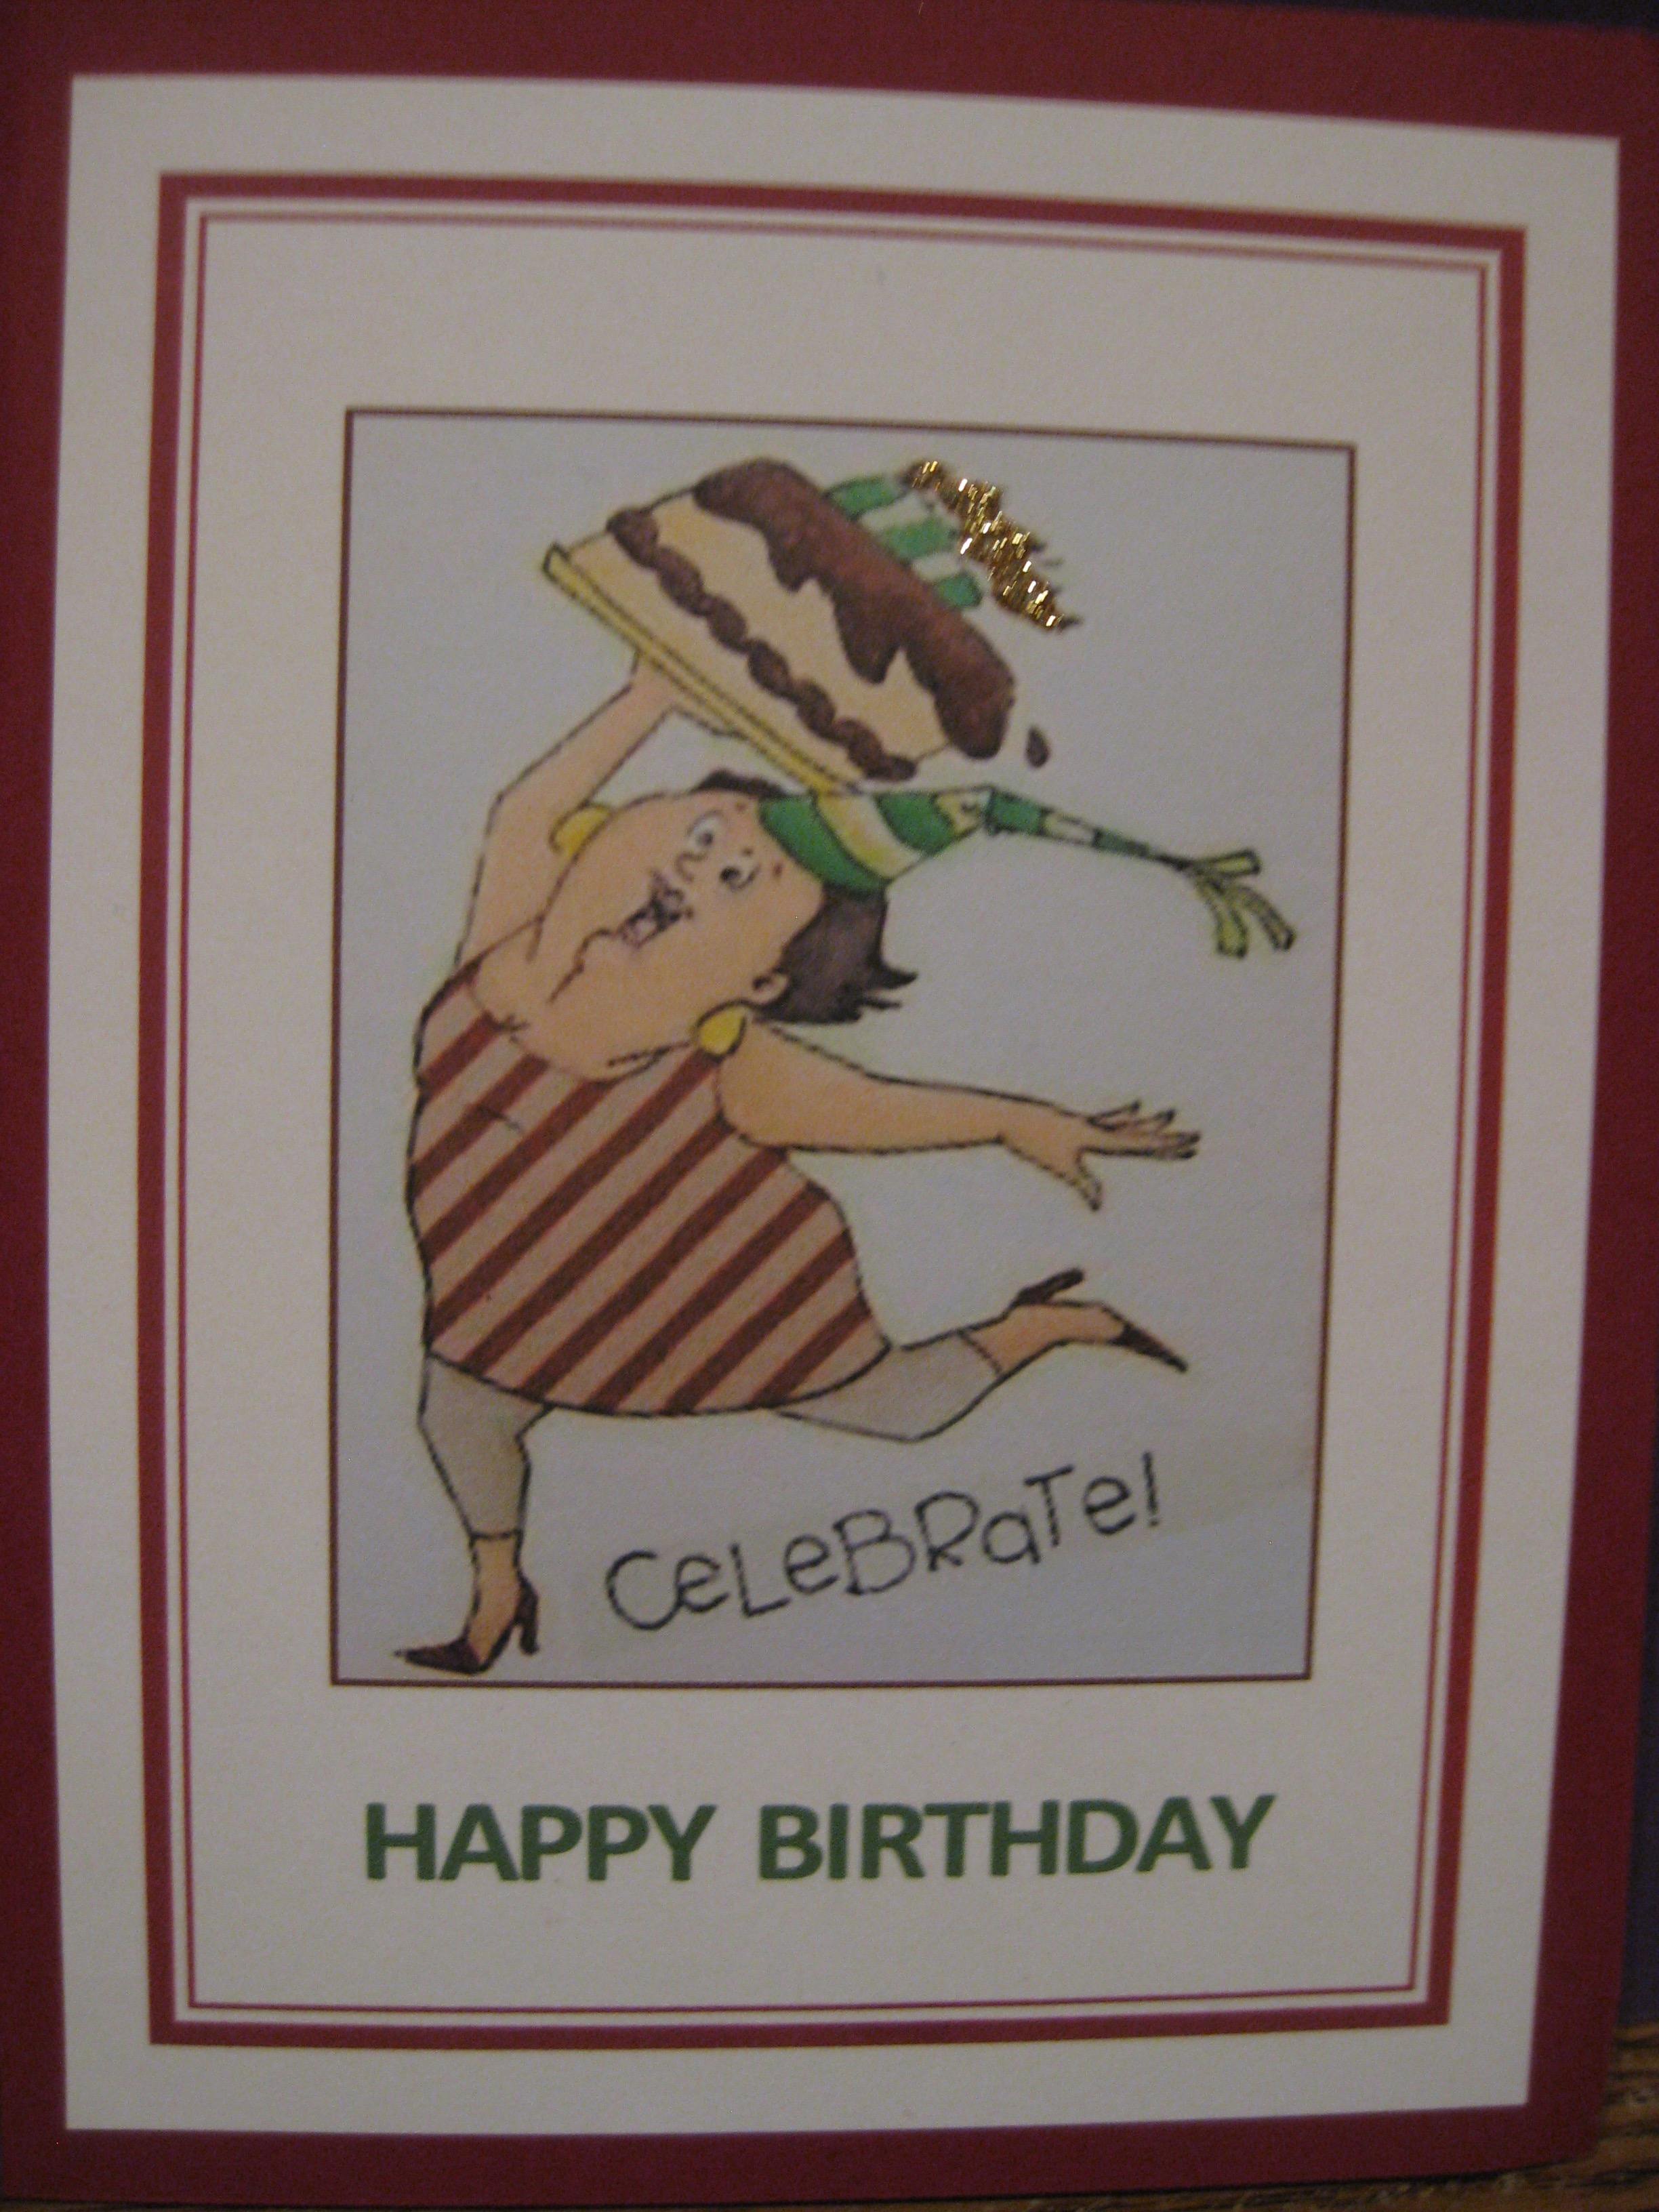 Celebrate/Cake